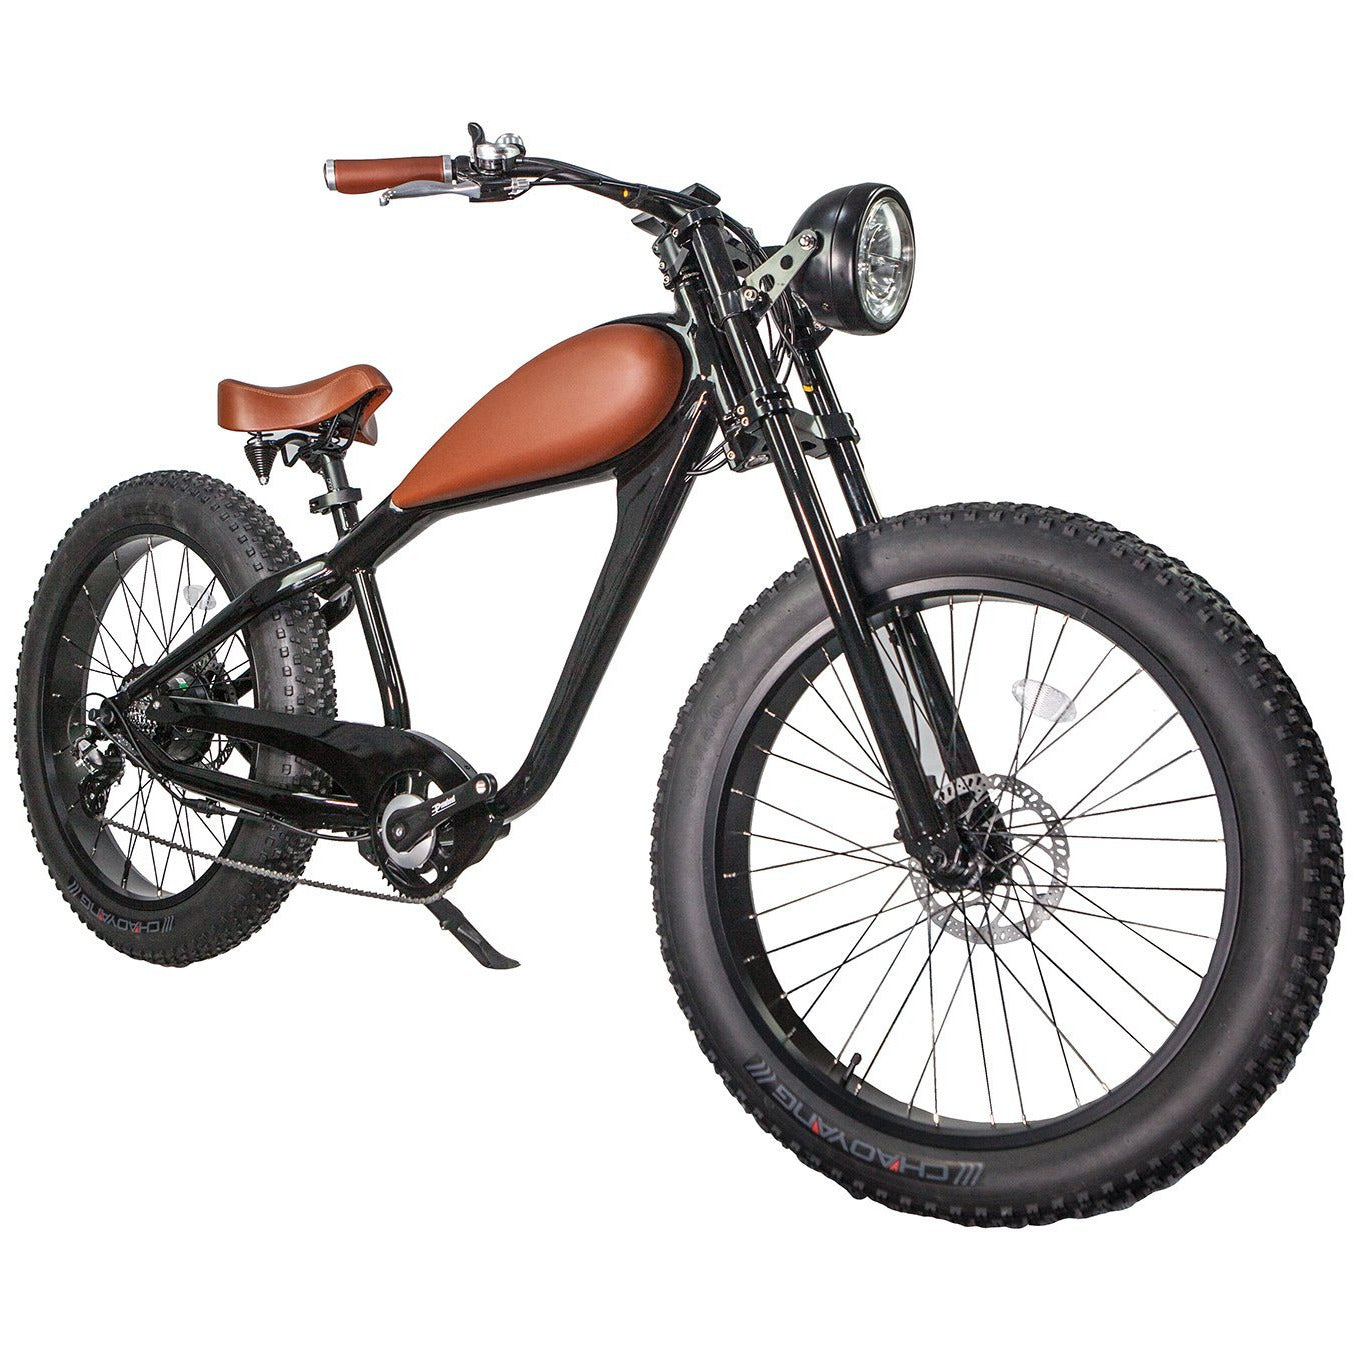 Revi Bikes High-Density ABS Plastic Tank Cover for Cheetah Ebike